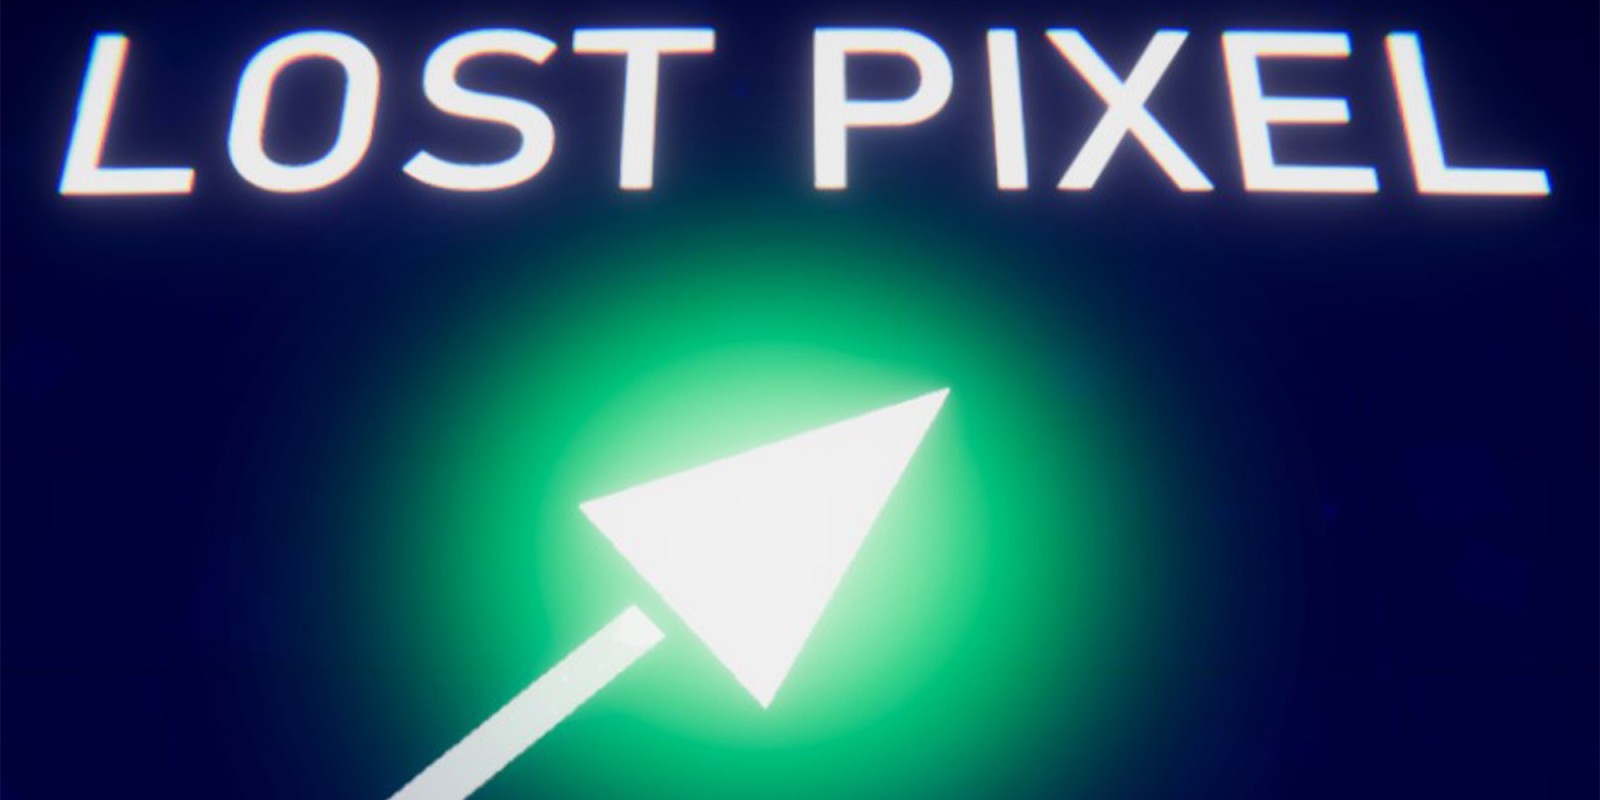 Lost Pixel